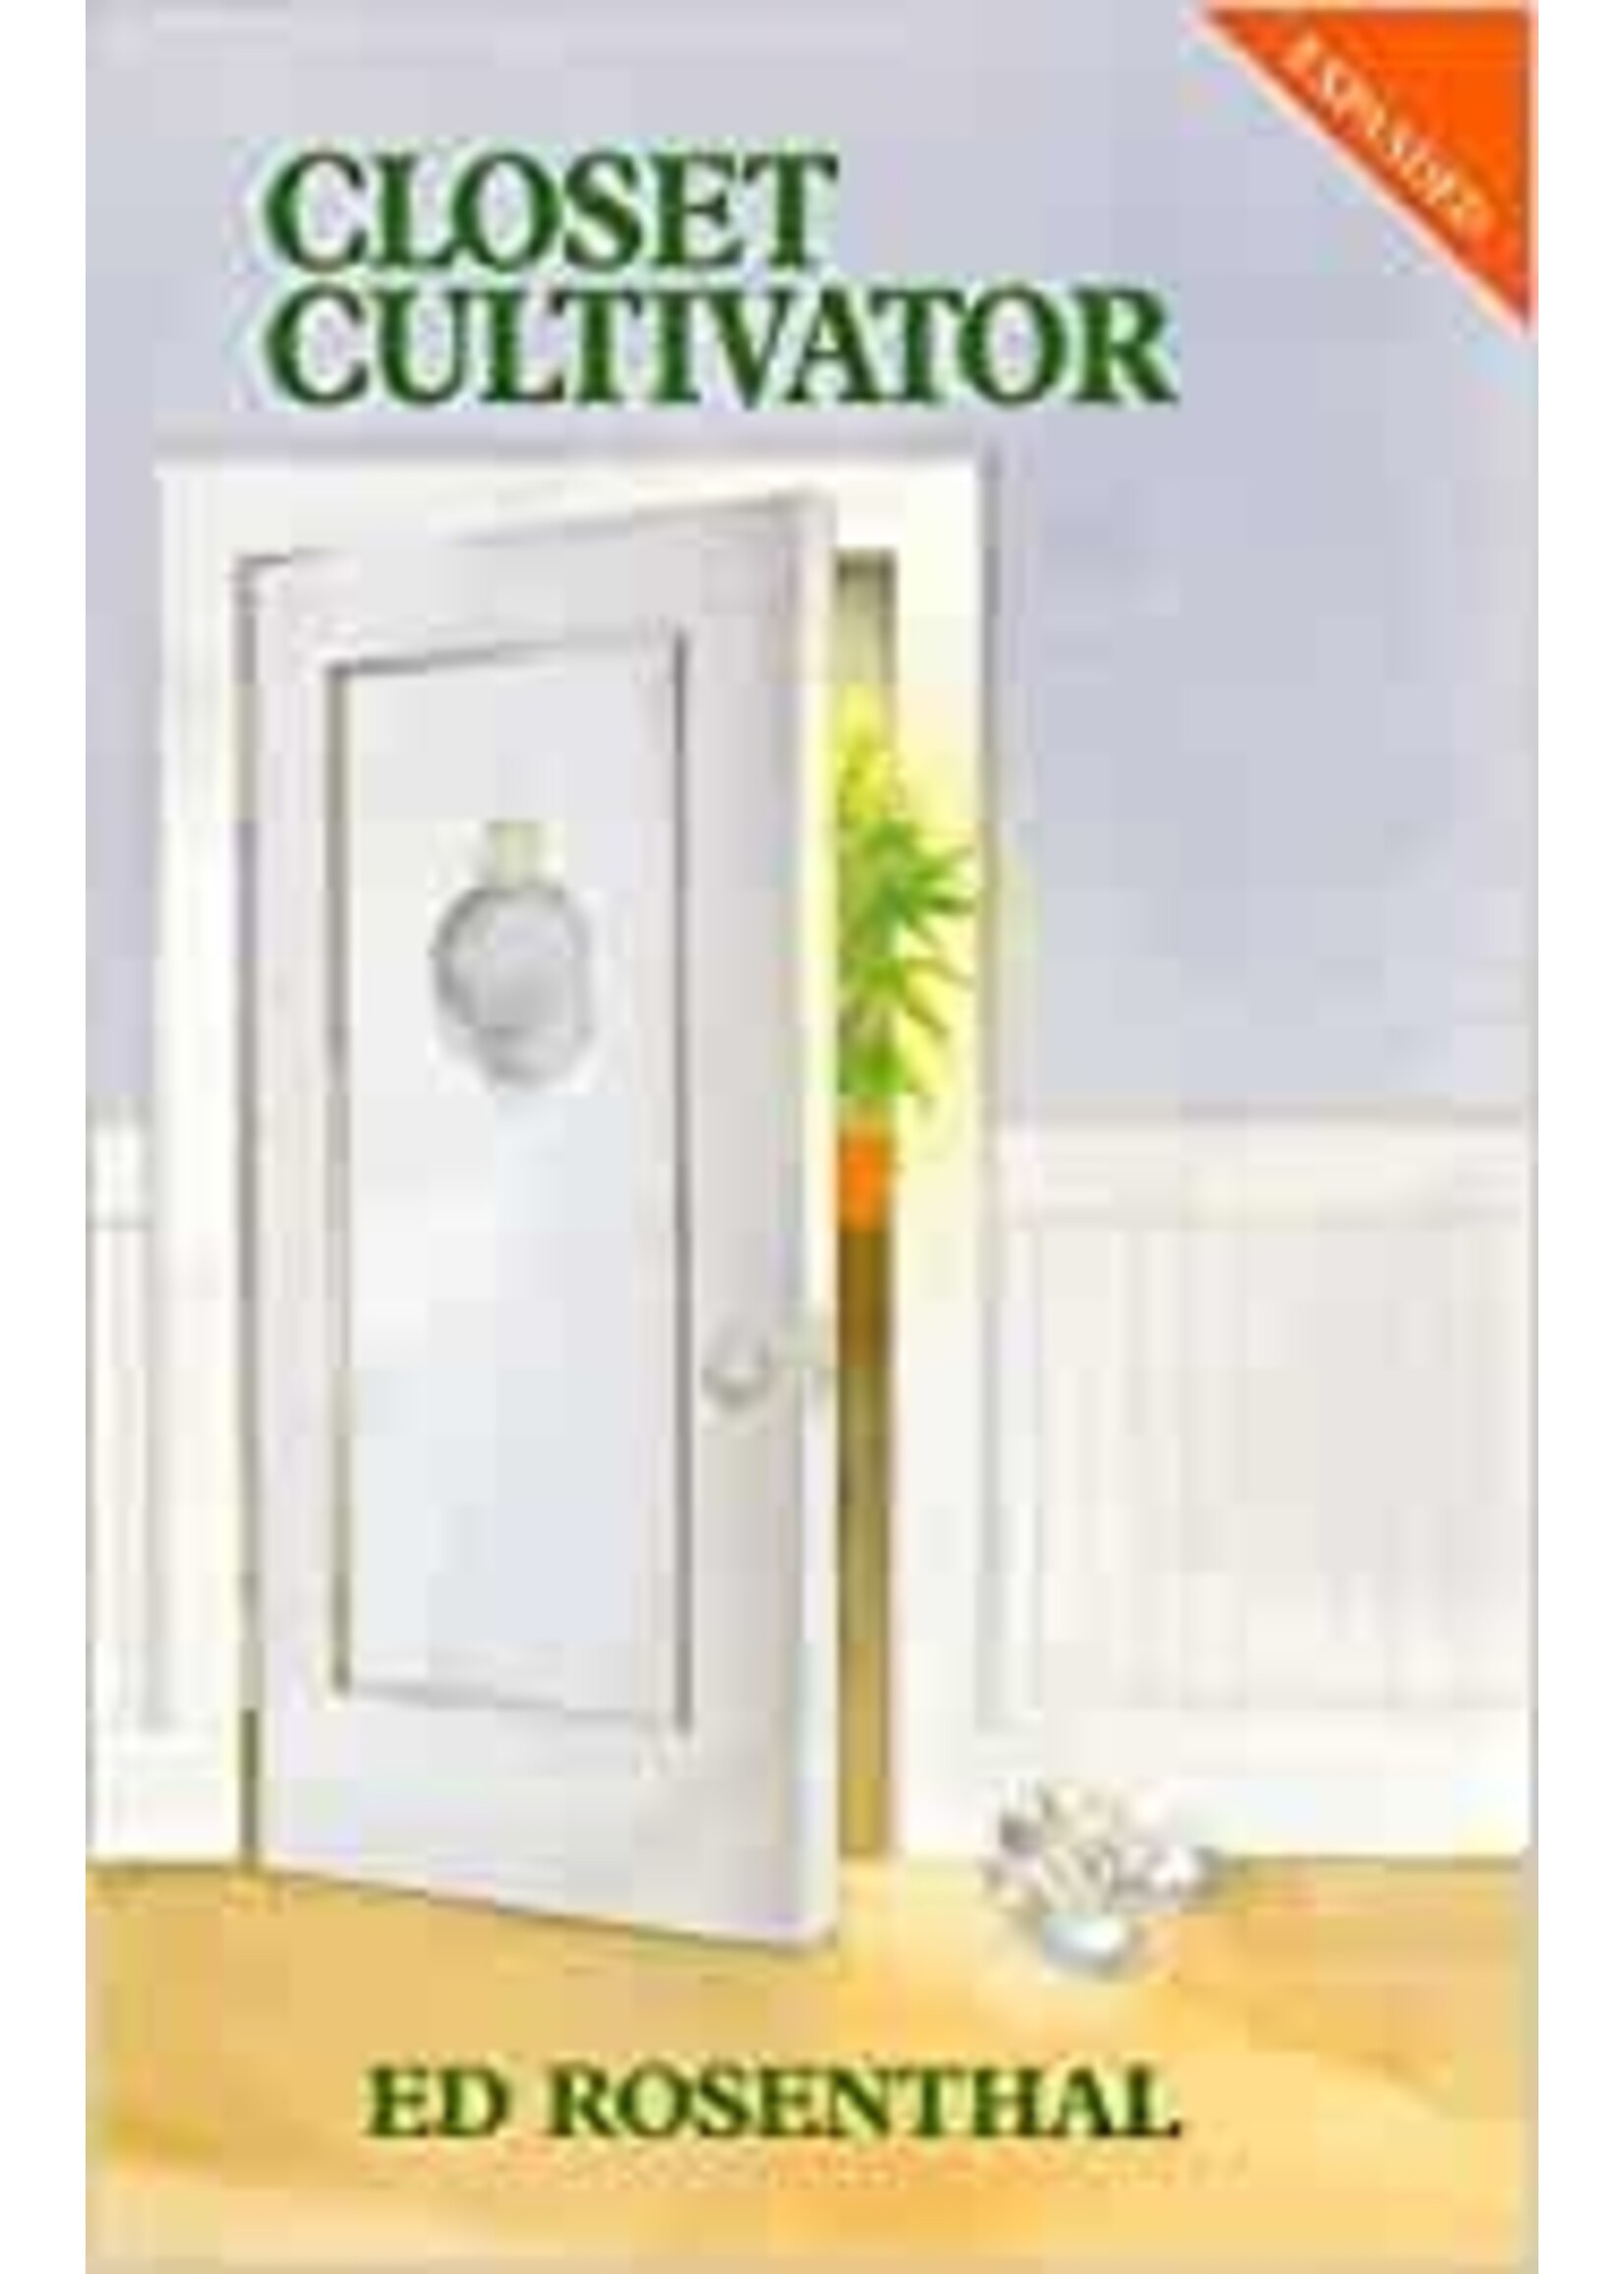 Closet Cultivator: Growing Marijuana Indoors Book by Ed Rosenthal